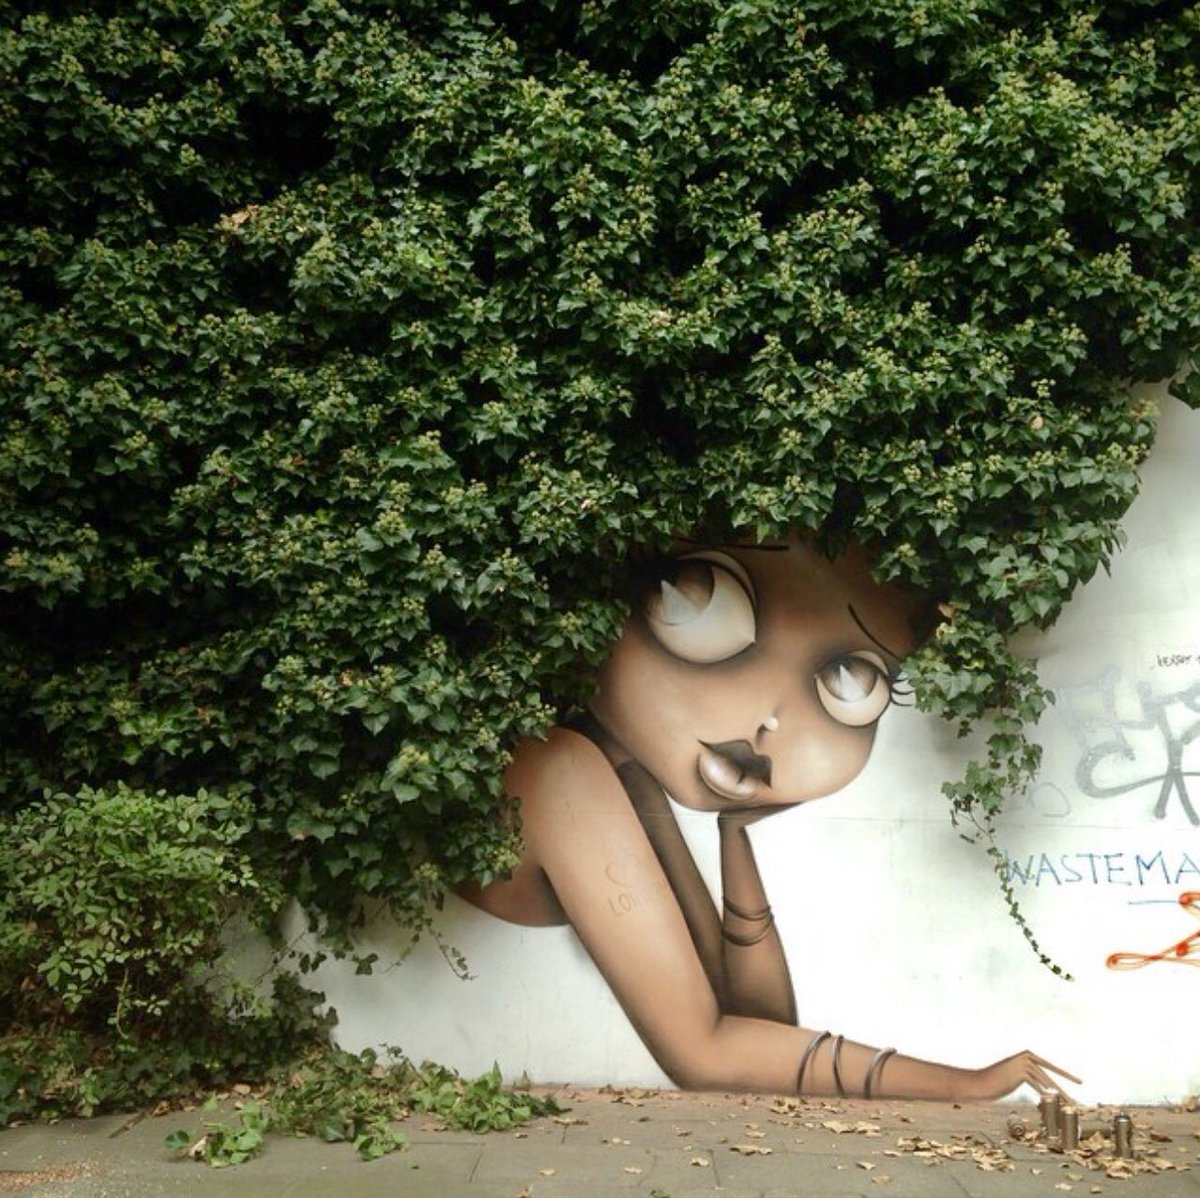 Mural in #Eauze #France

#art #VinieGraffiti #streetart #mural 

#photography #MarkHat #garden